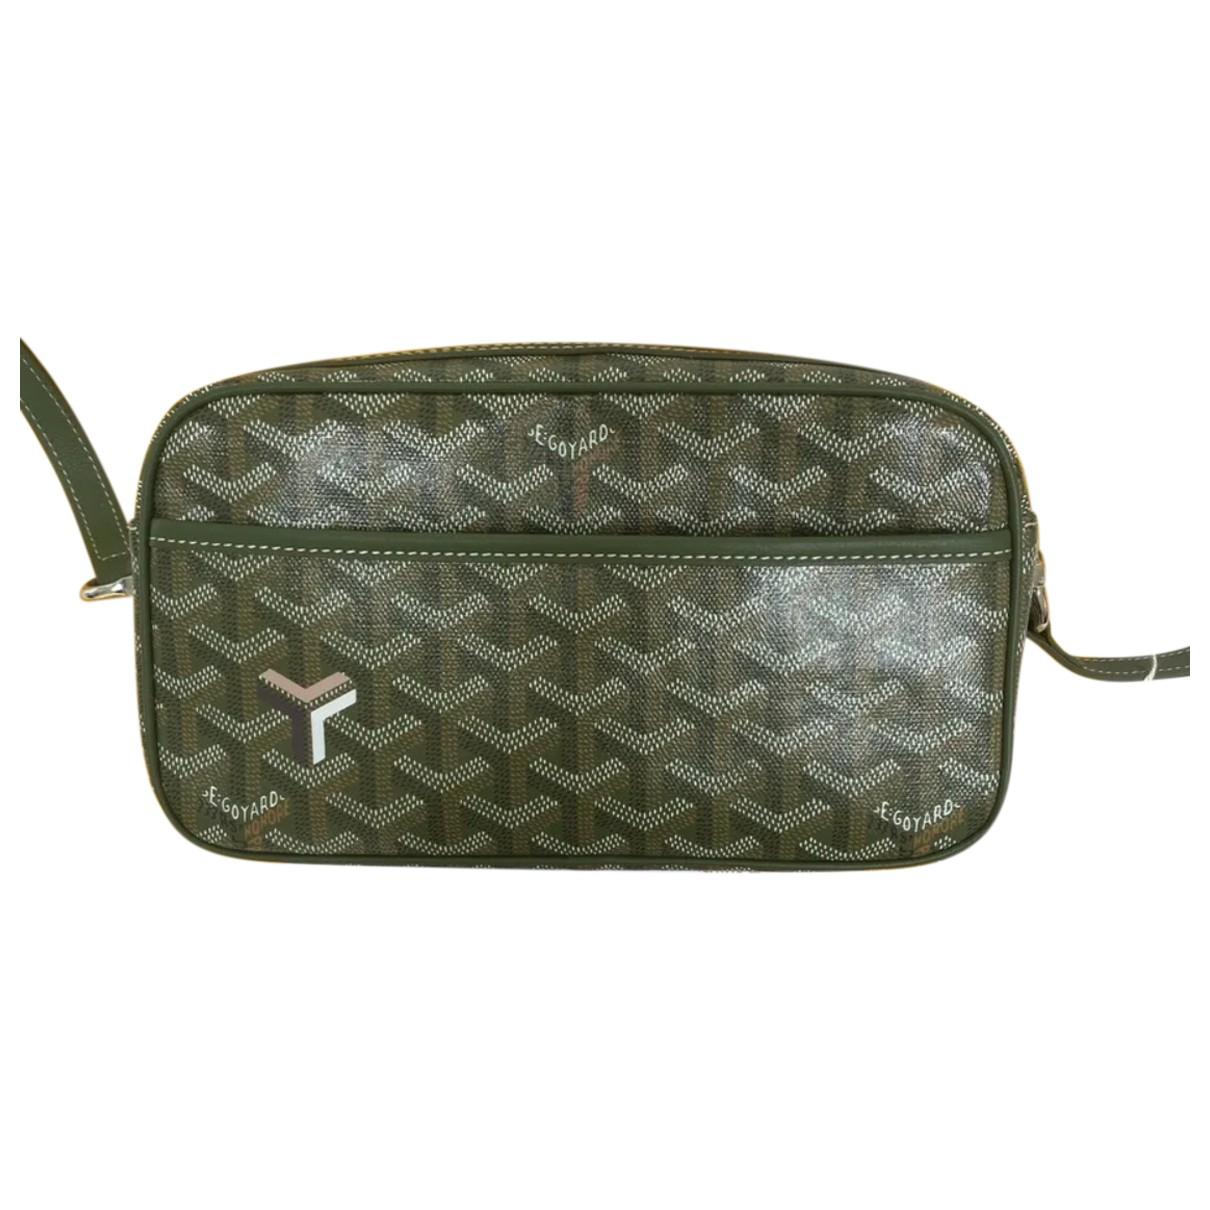 Cap vert leather crossbody bag